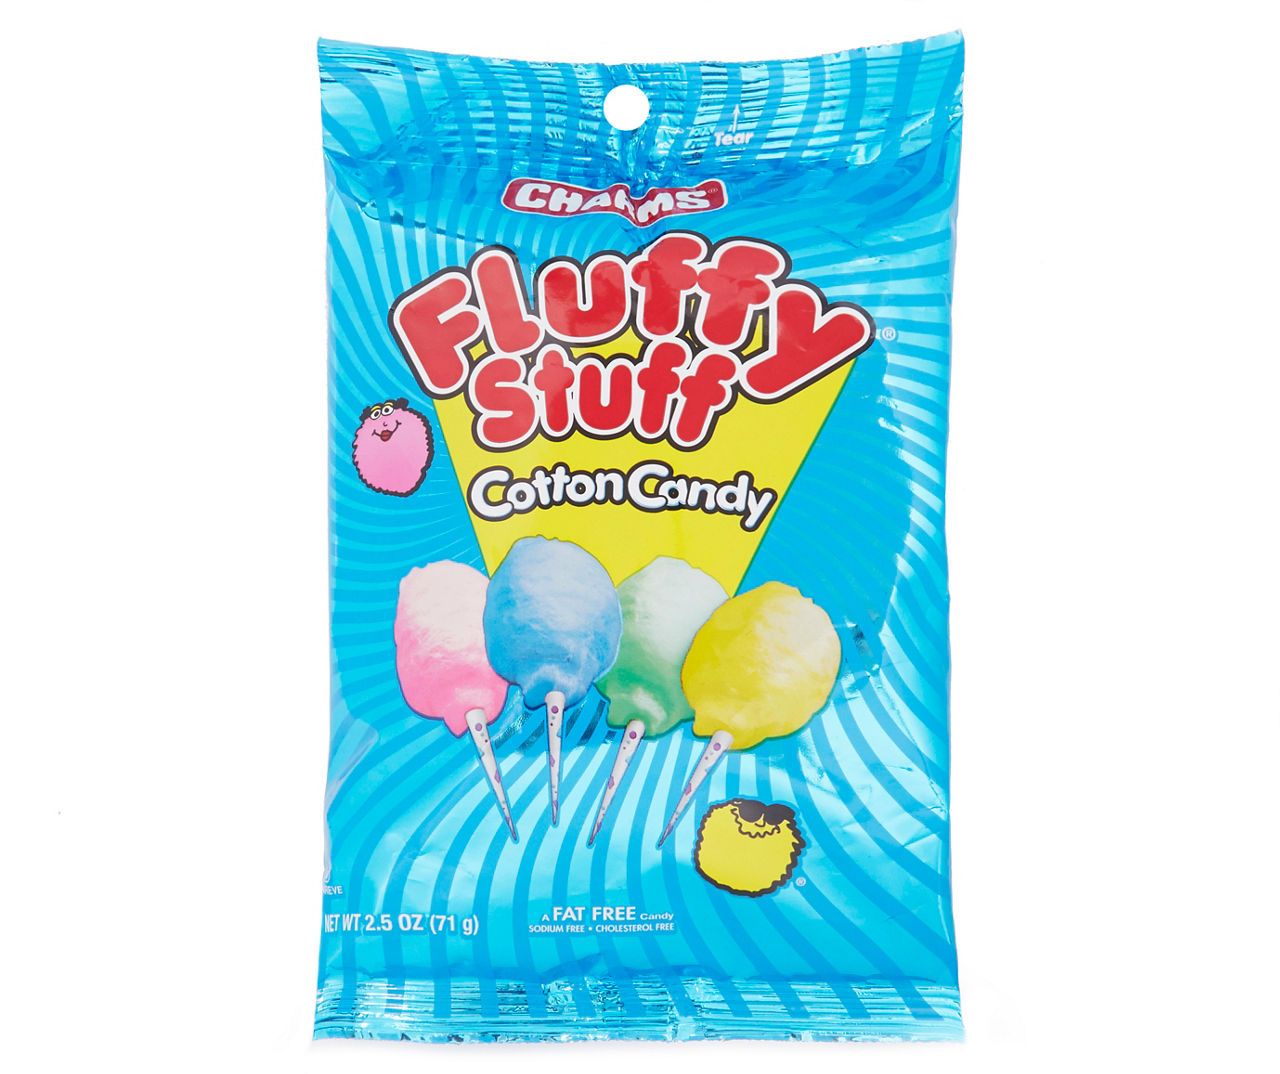 Charms fluffy stuff cotton candy 2.5oz single